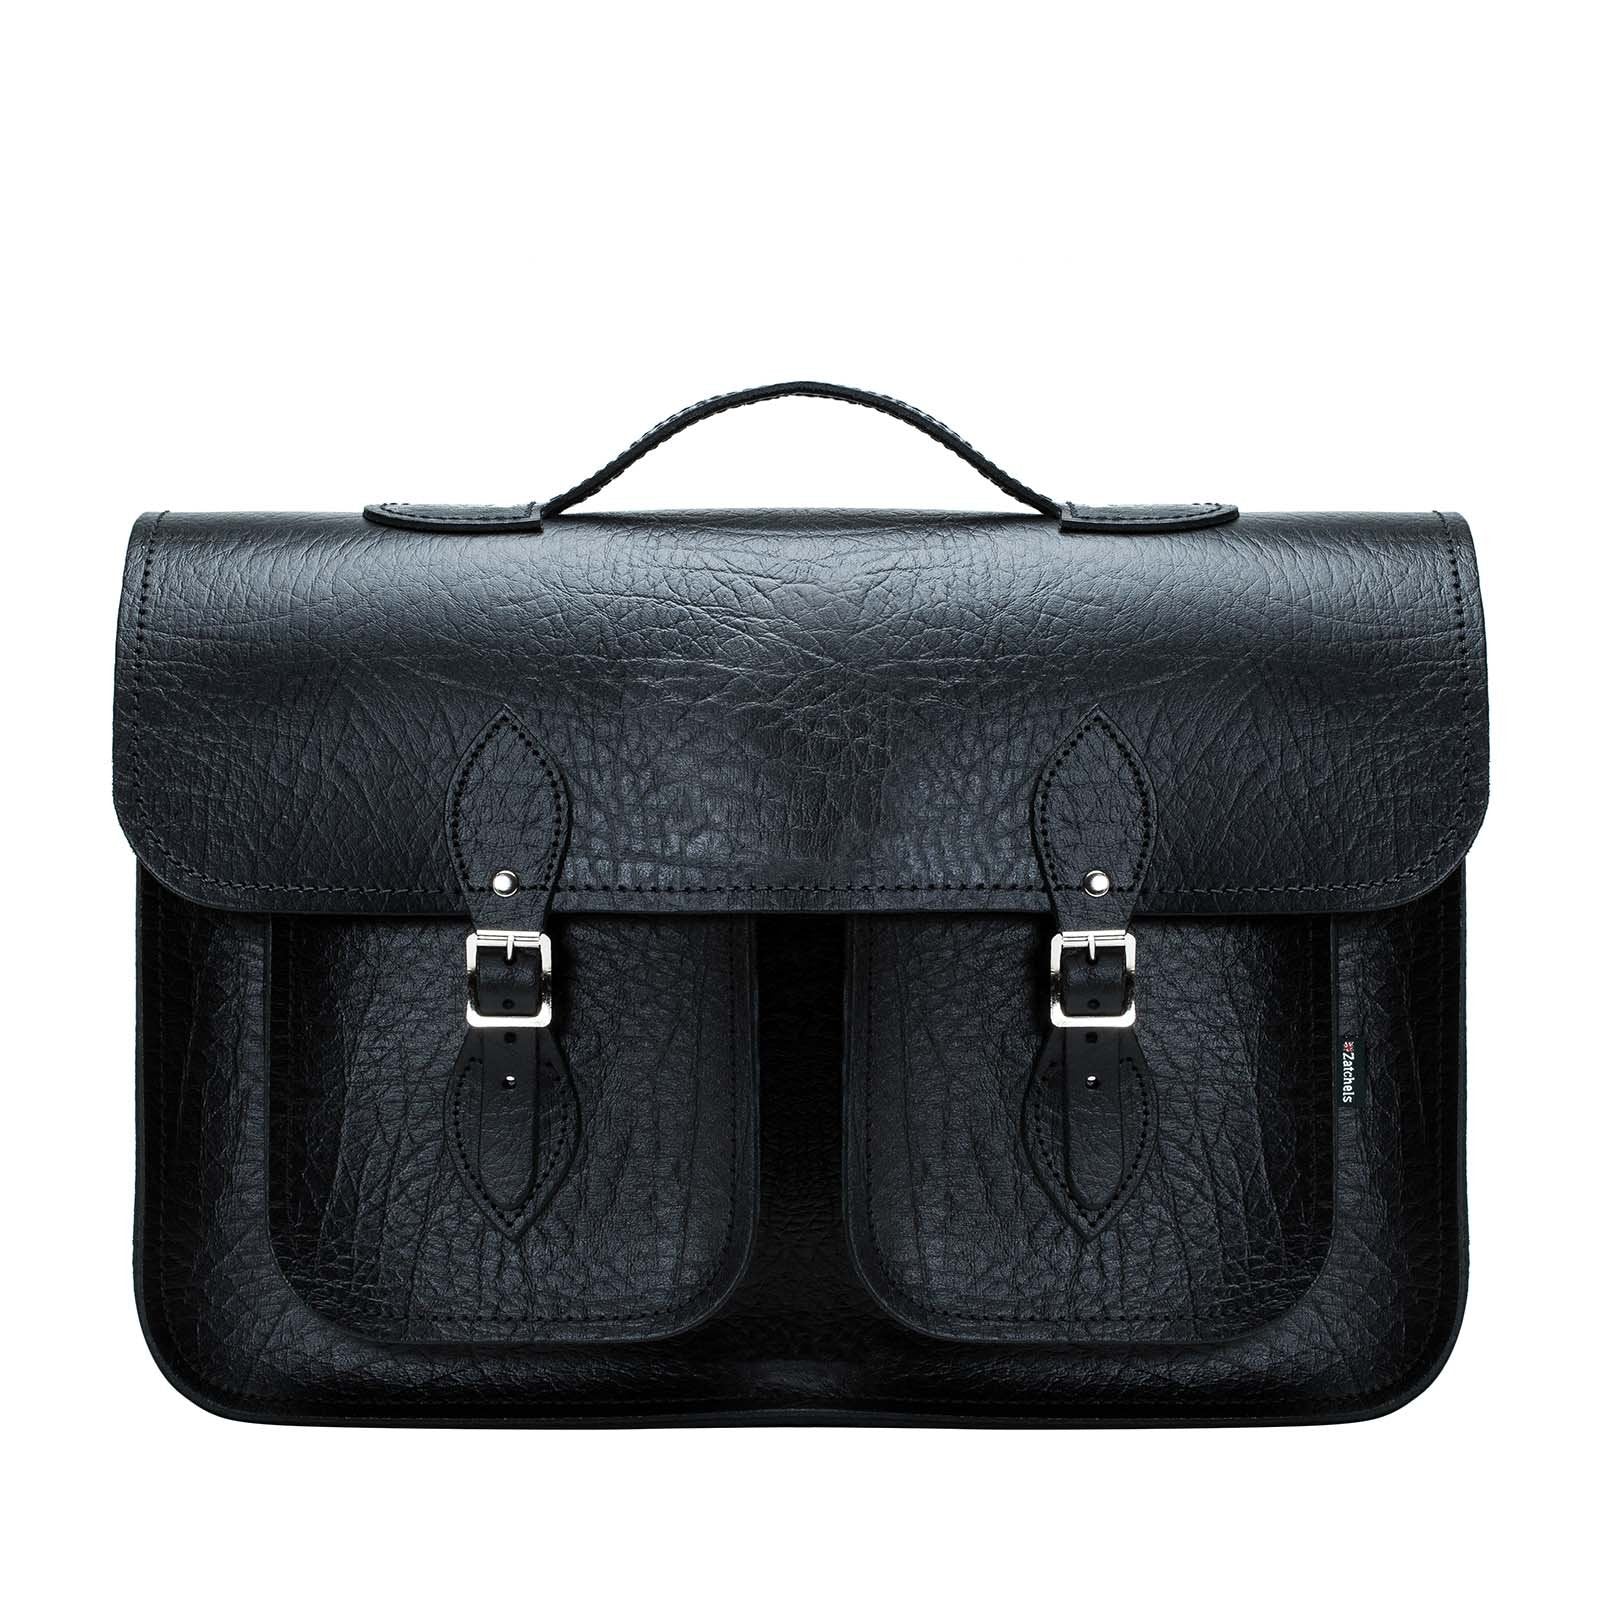 Twin Pocket Executive Handmade Leather Satchel - Black - 17.5"